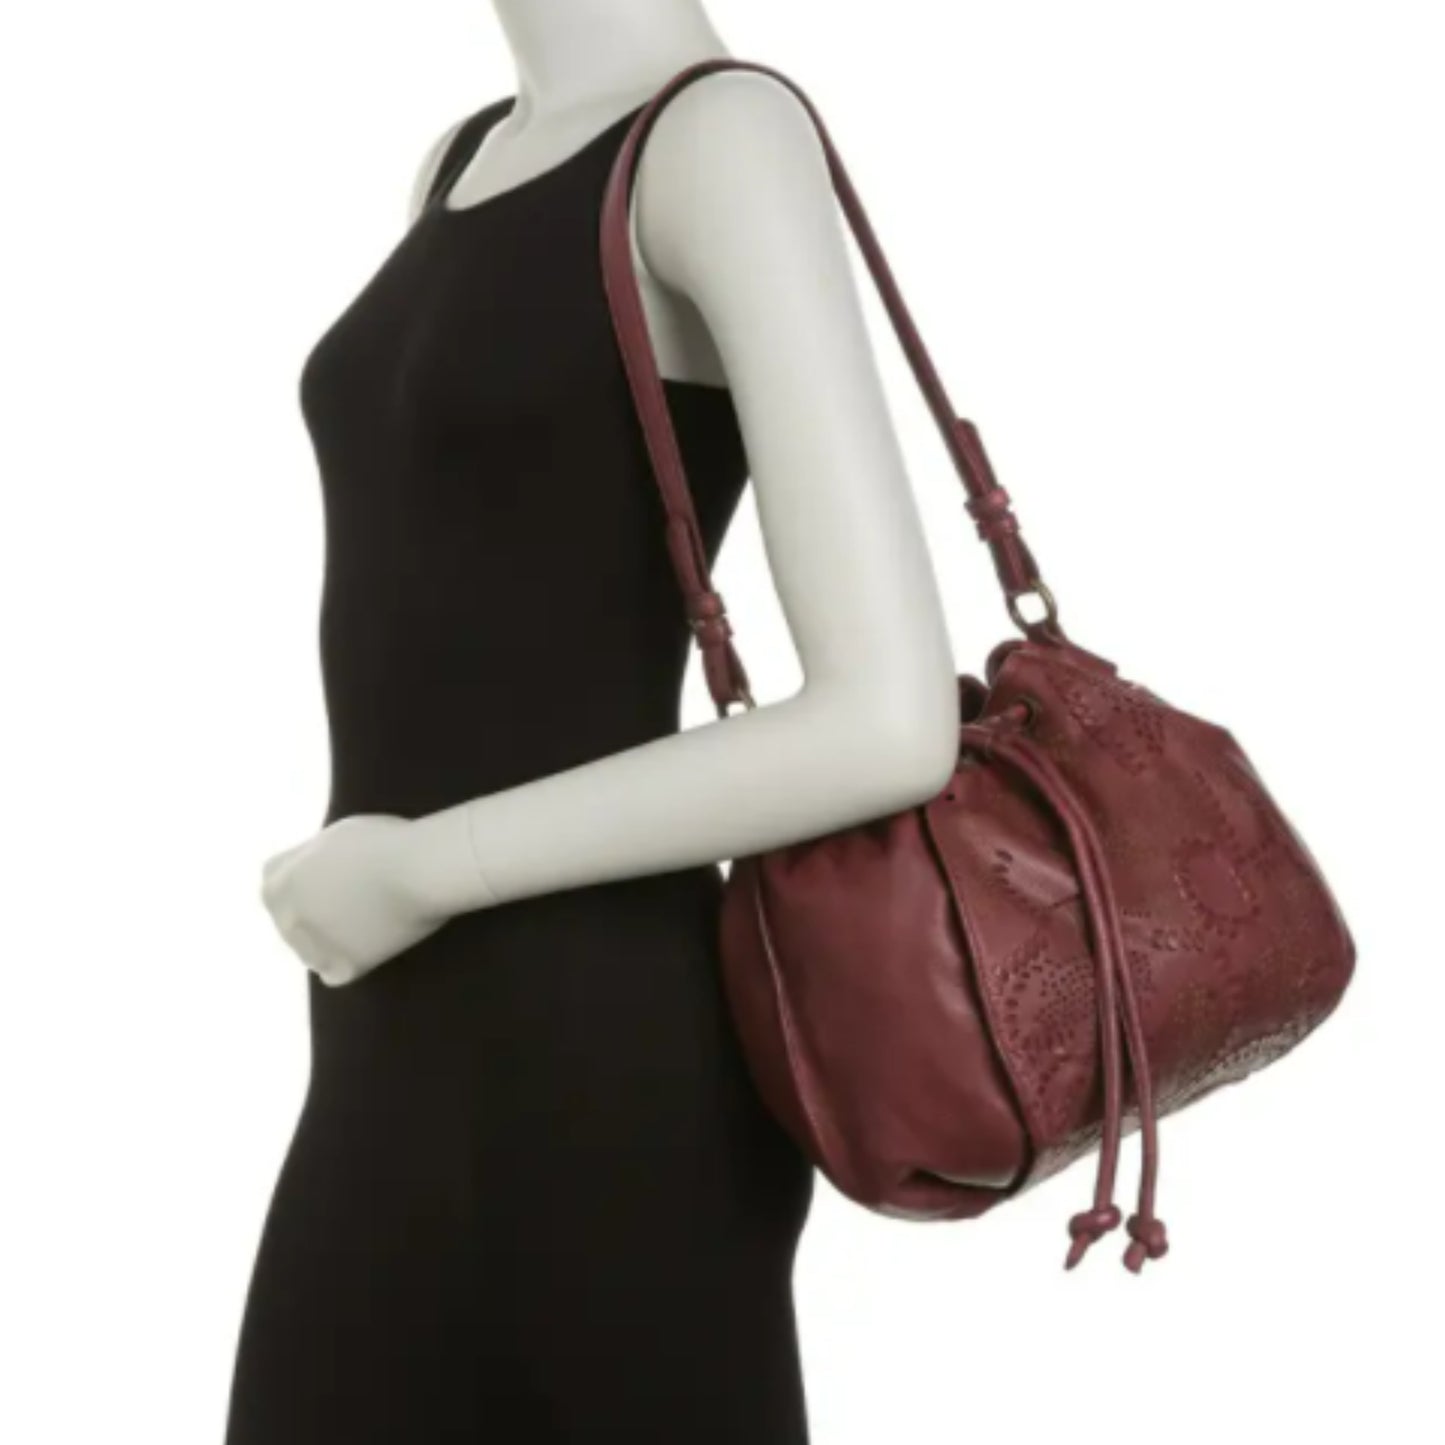 FRYE Vivian Leather Perforated Boho Bucket Crossbody Bag